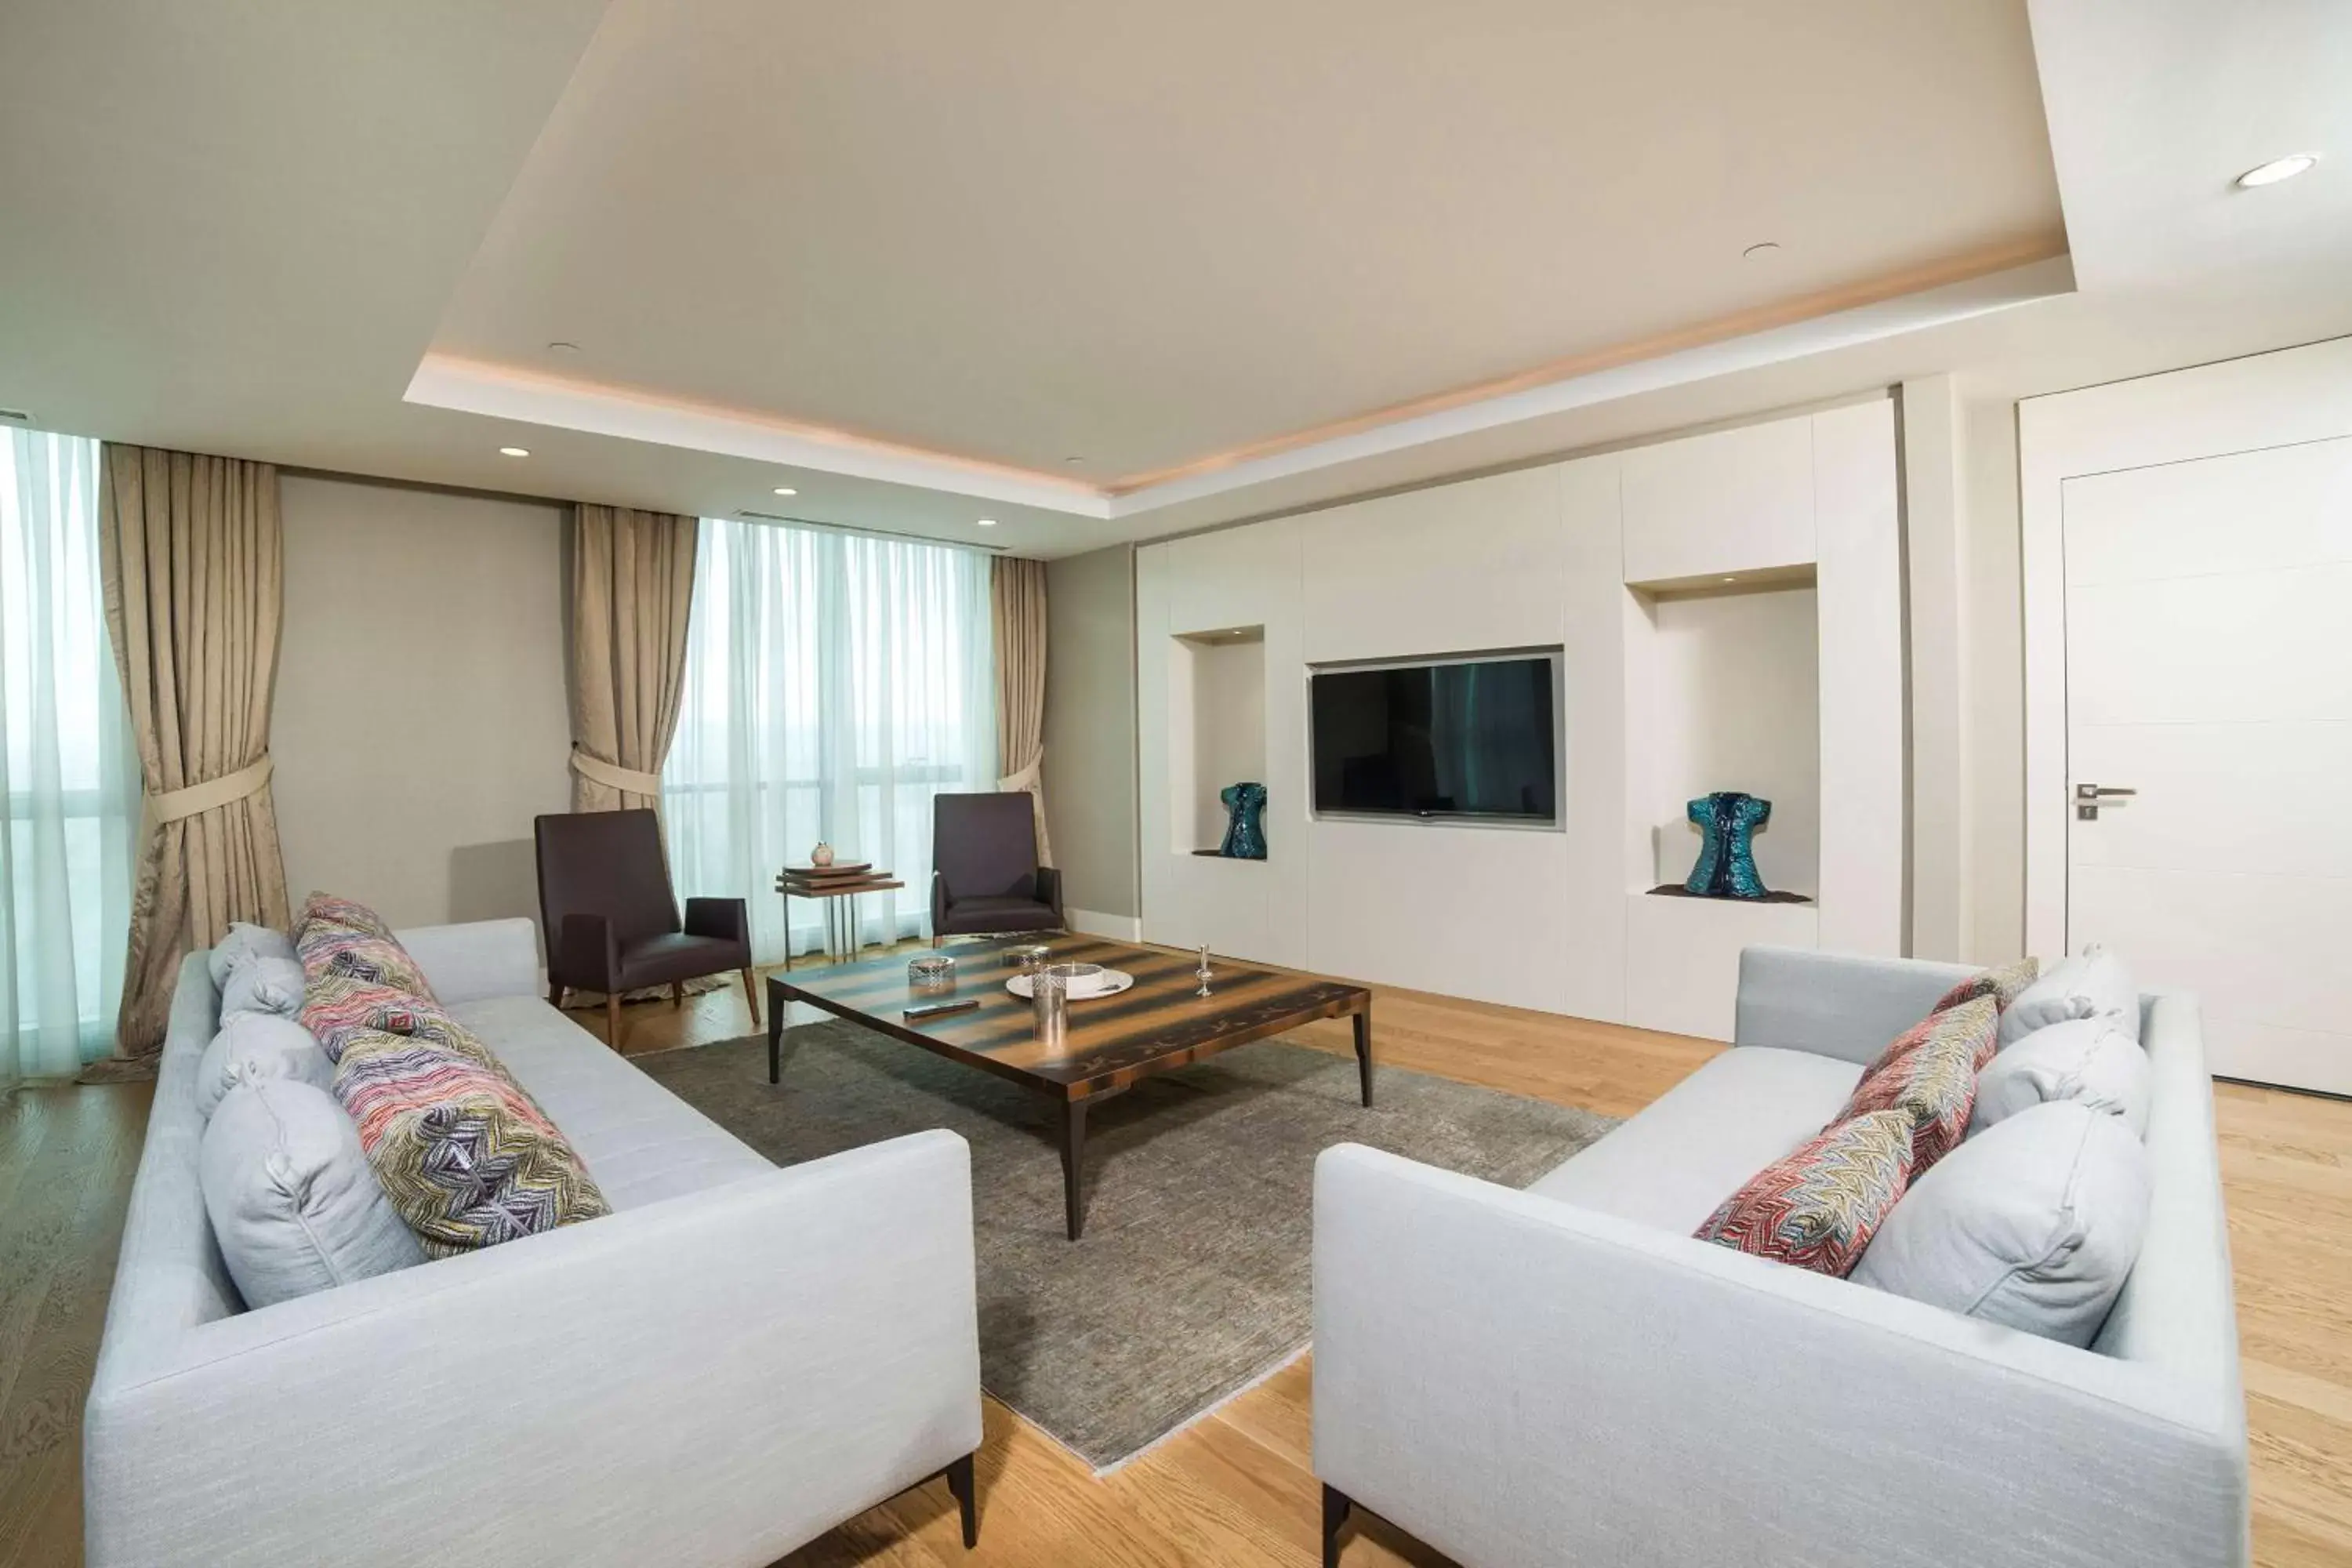 Photo of the whole room, Seating Area in Radisson Blu Hotel, Kayseri